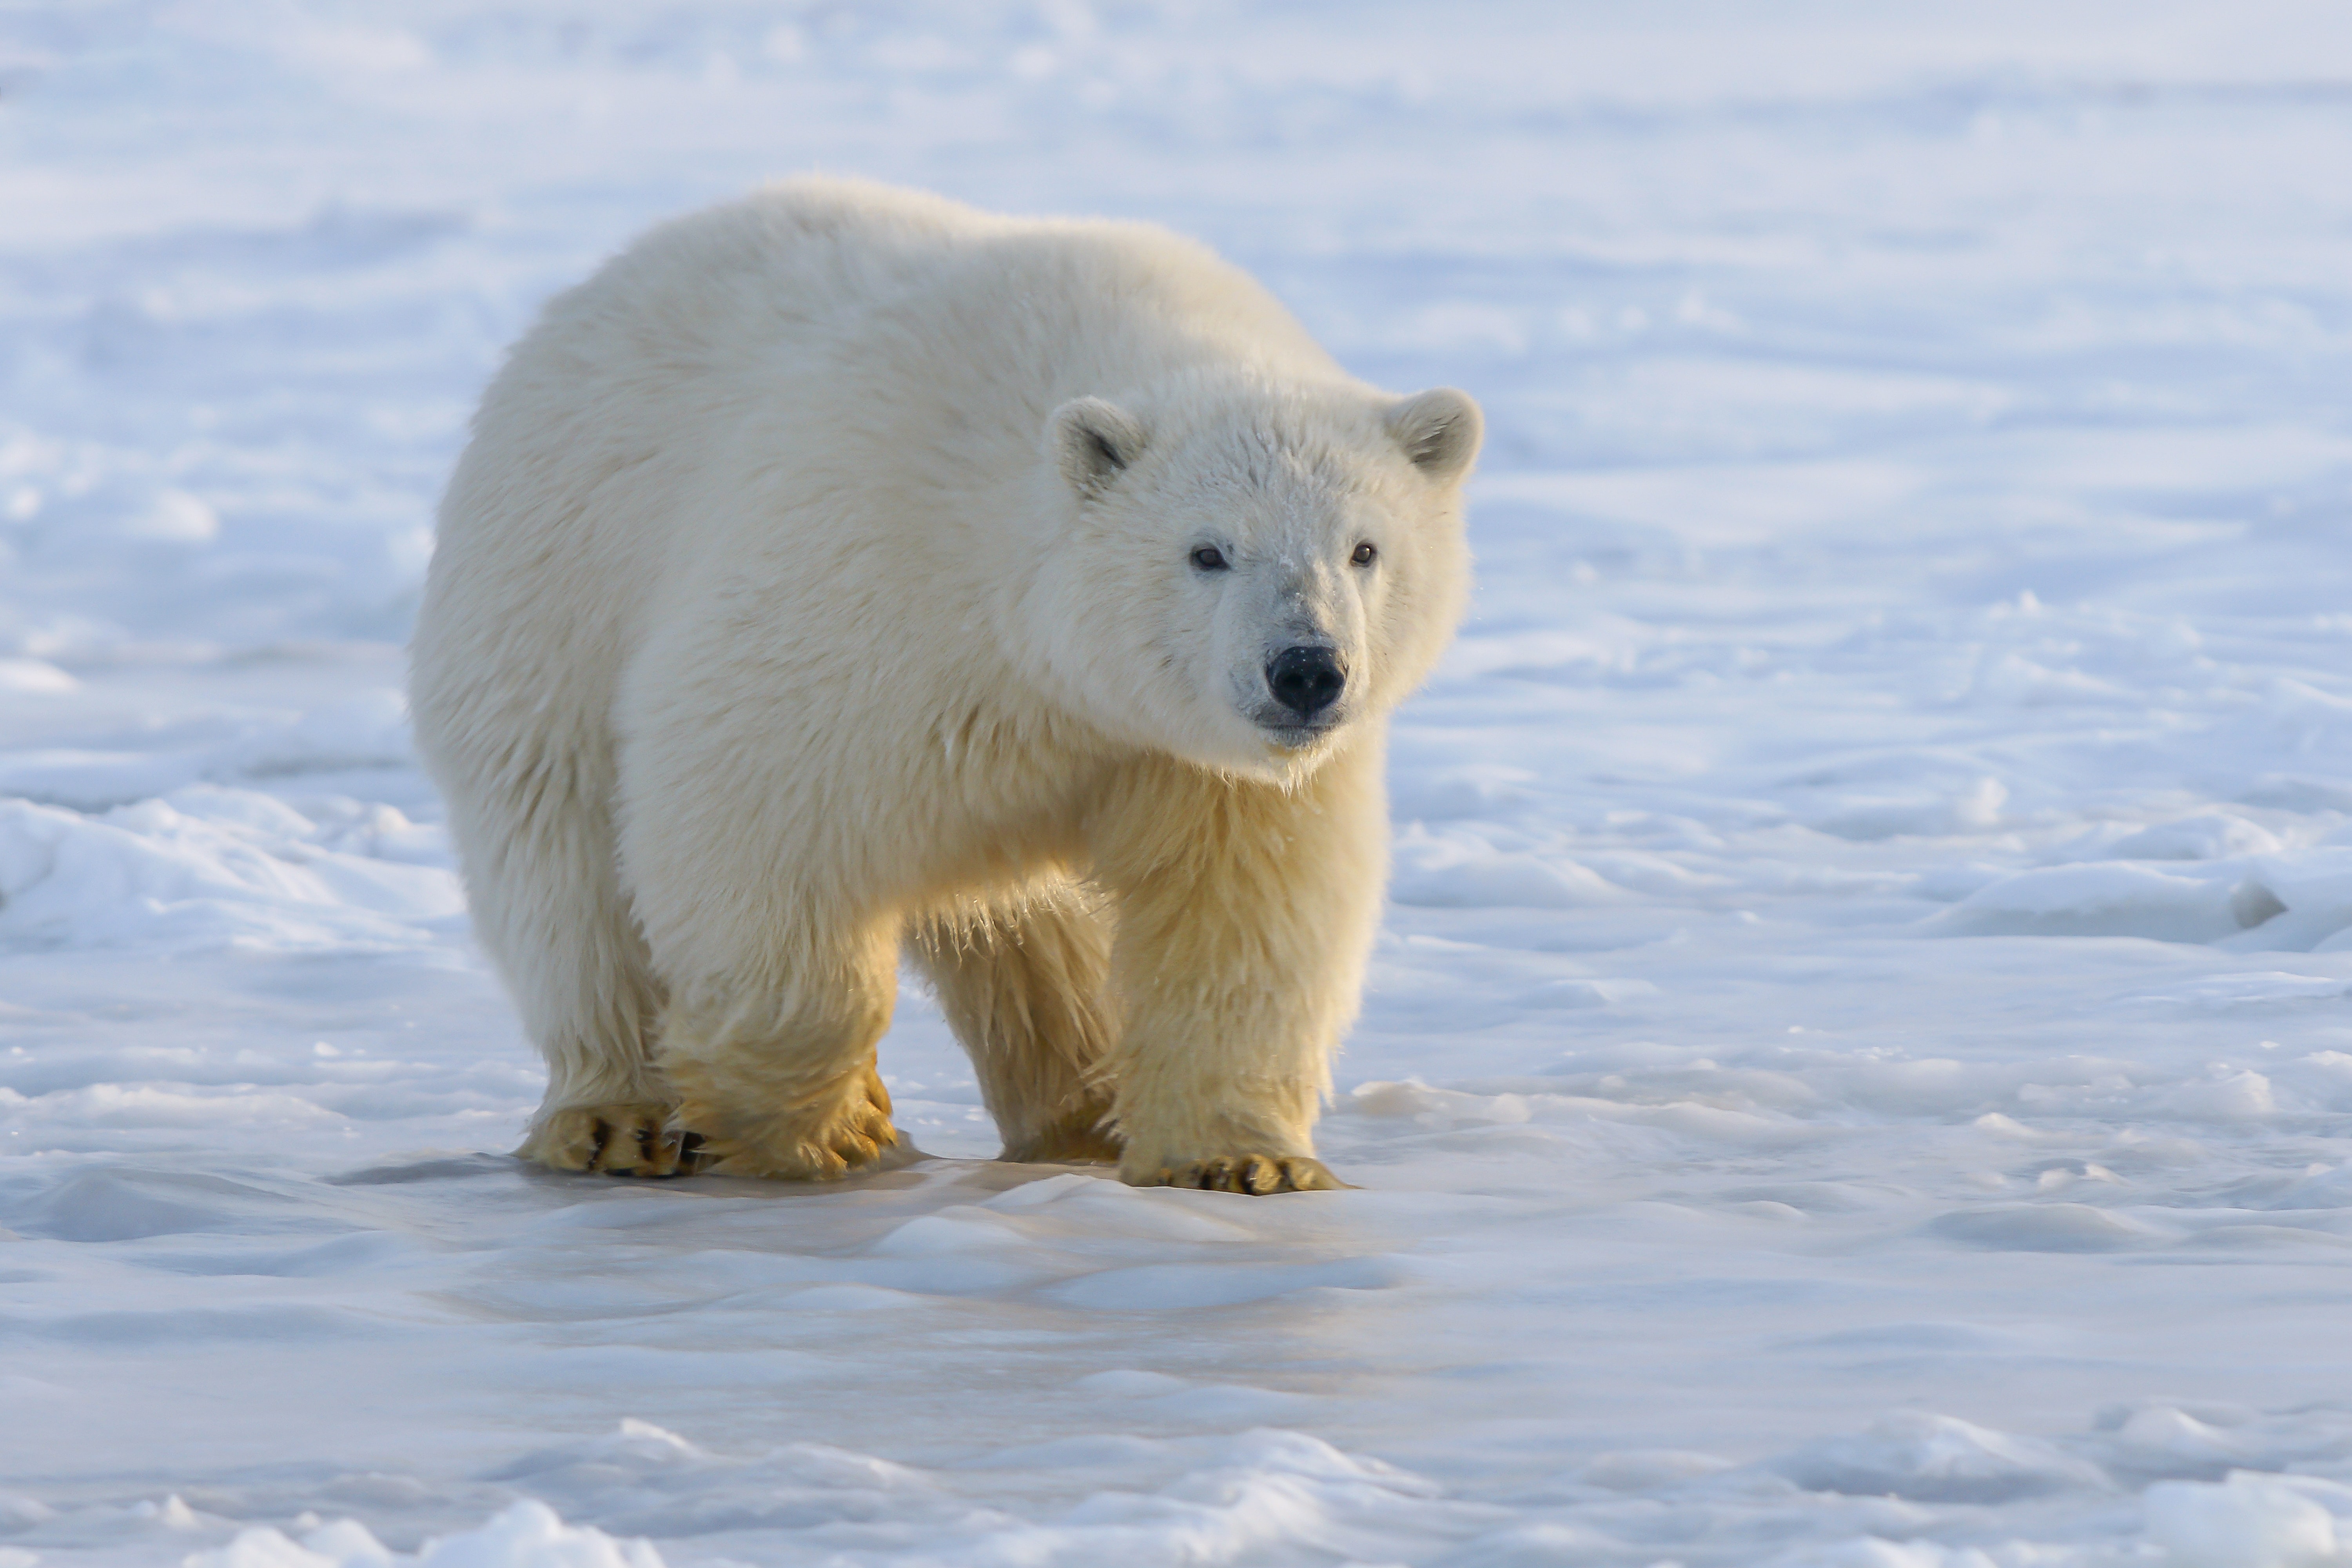 Popular Polar Bear Image for Phone